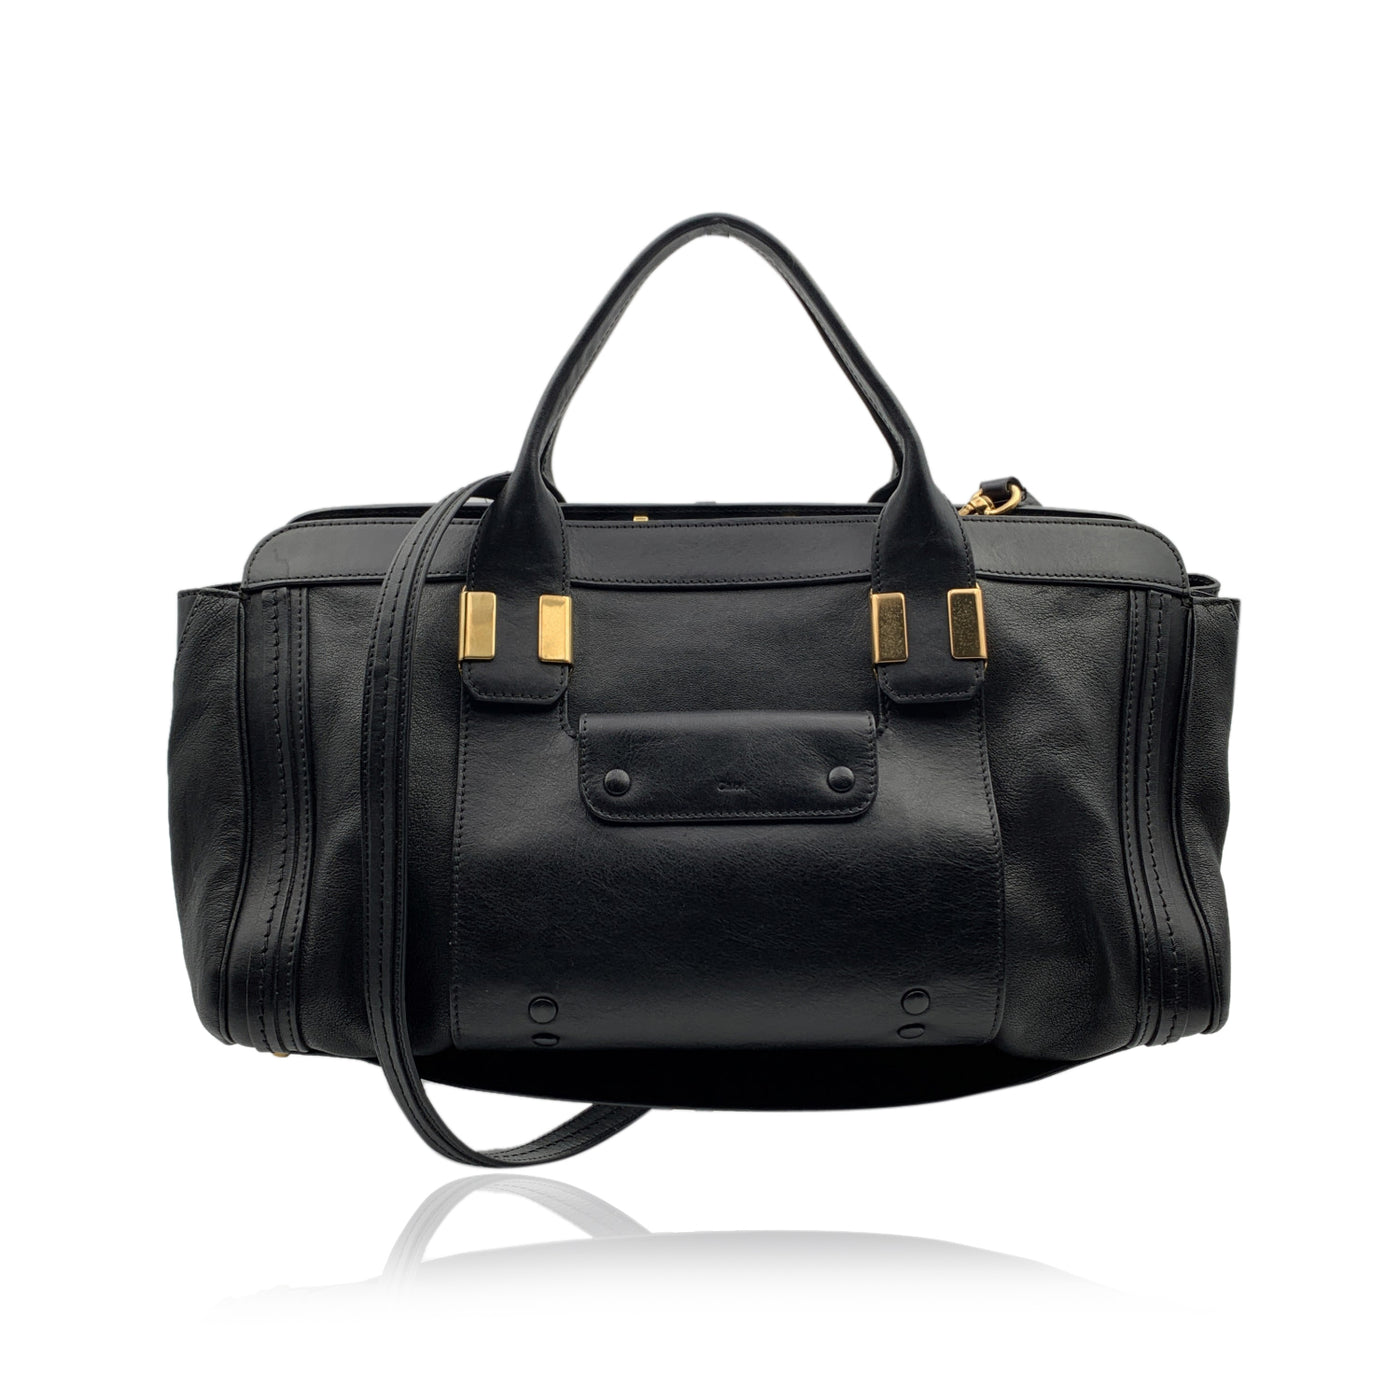 Chloe Black Leather Alice Bag Satchel Handbag with Strap